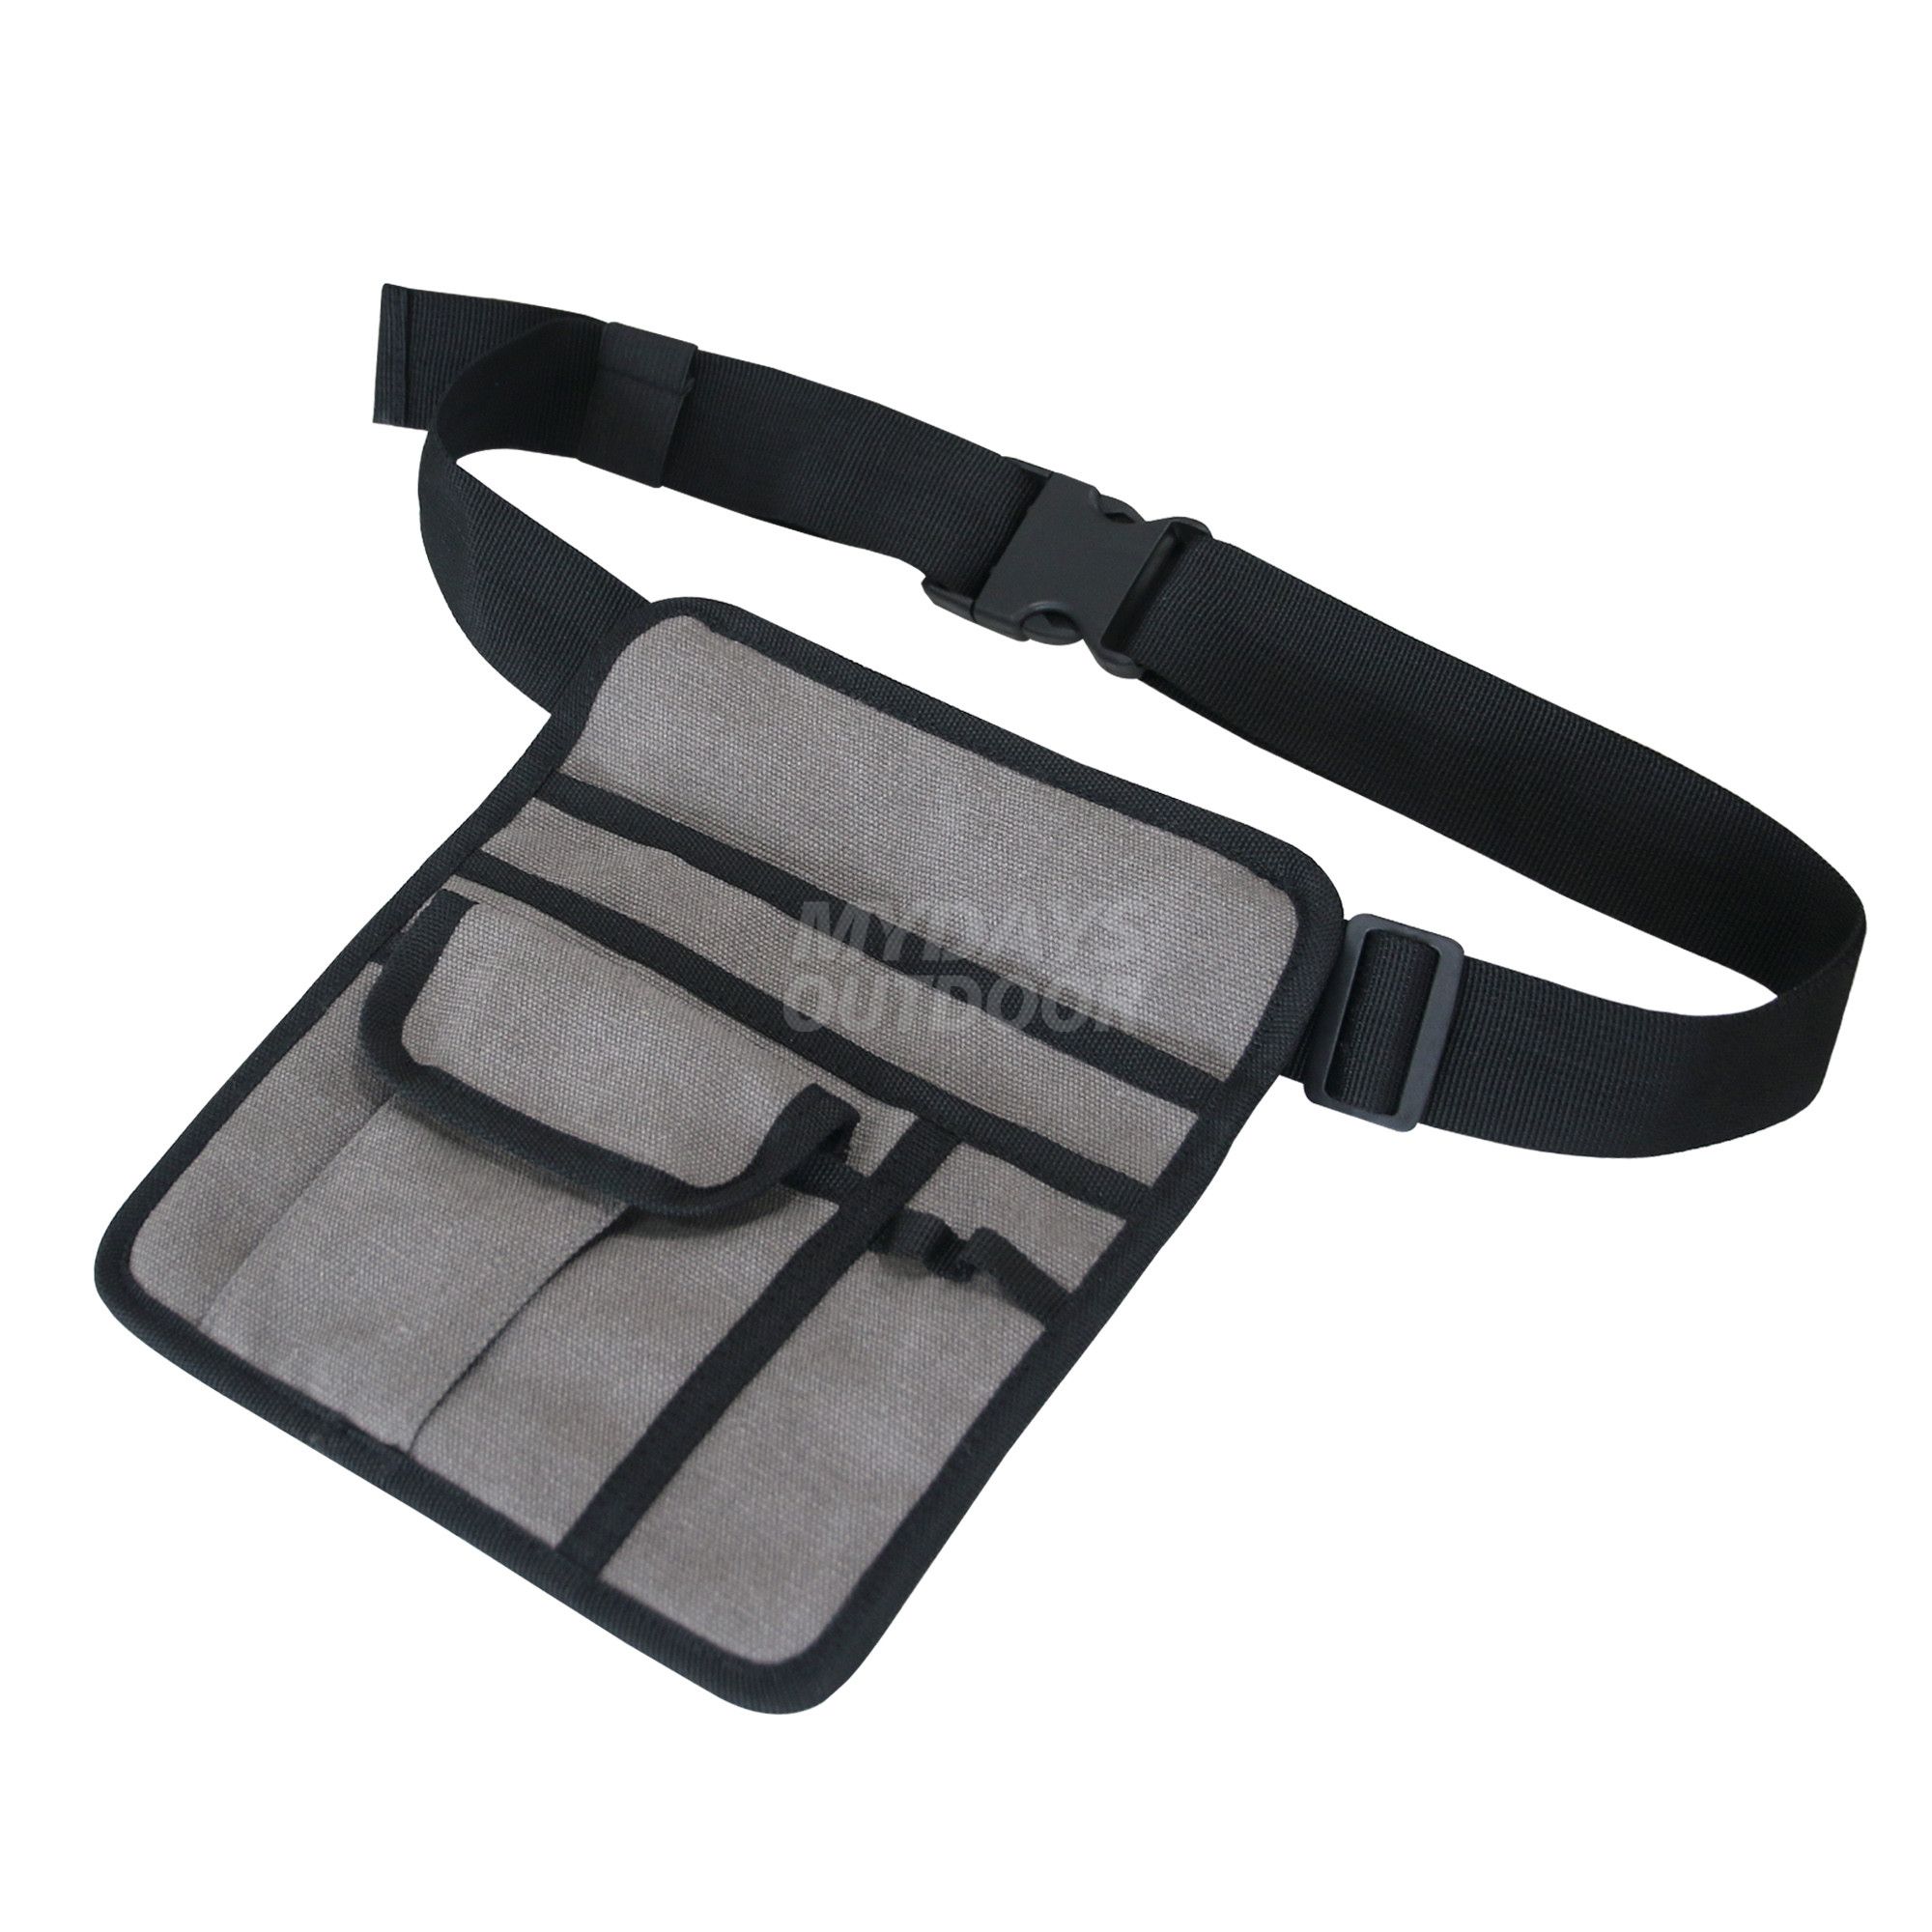 Pouch Restaurant Waist Money Apron Bag with Adjustable Belt MDSOB-17